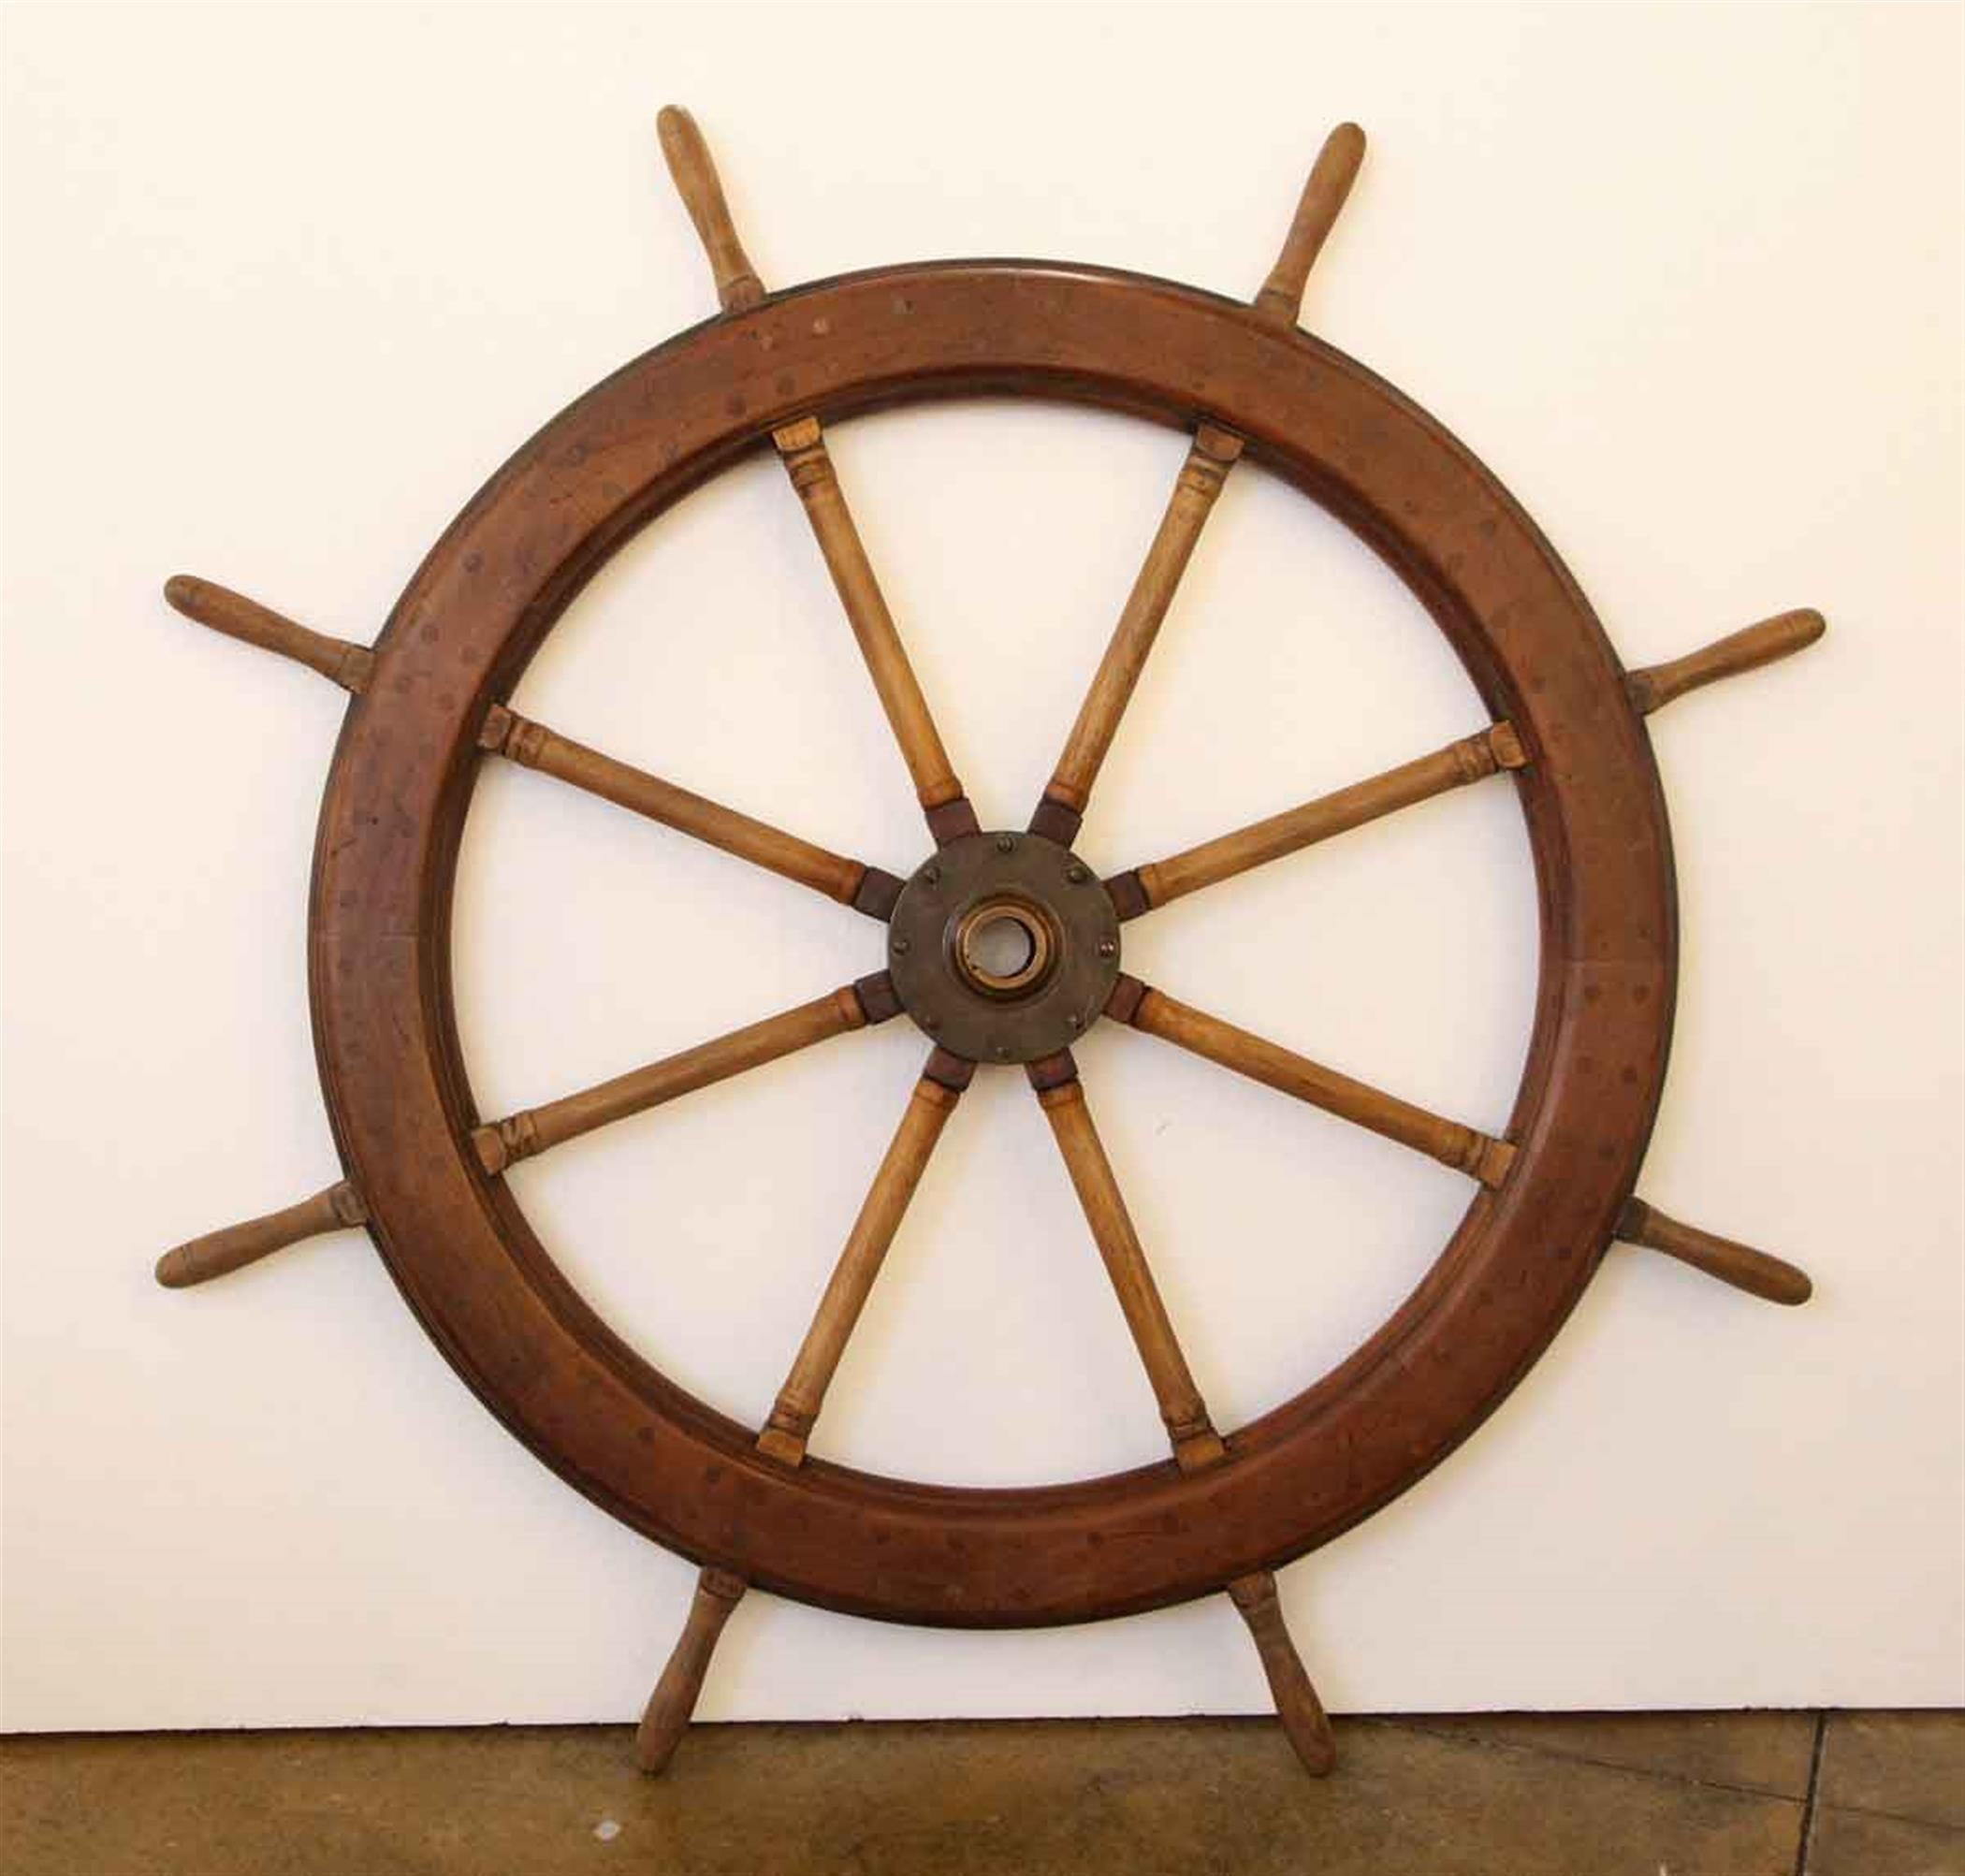 Industrial 1940s Wood Ship Wheel with Bronze Center Hub, Spoke to Spoke